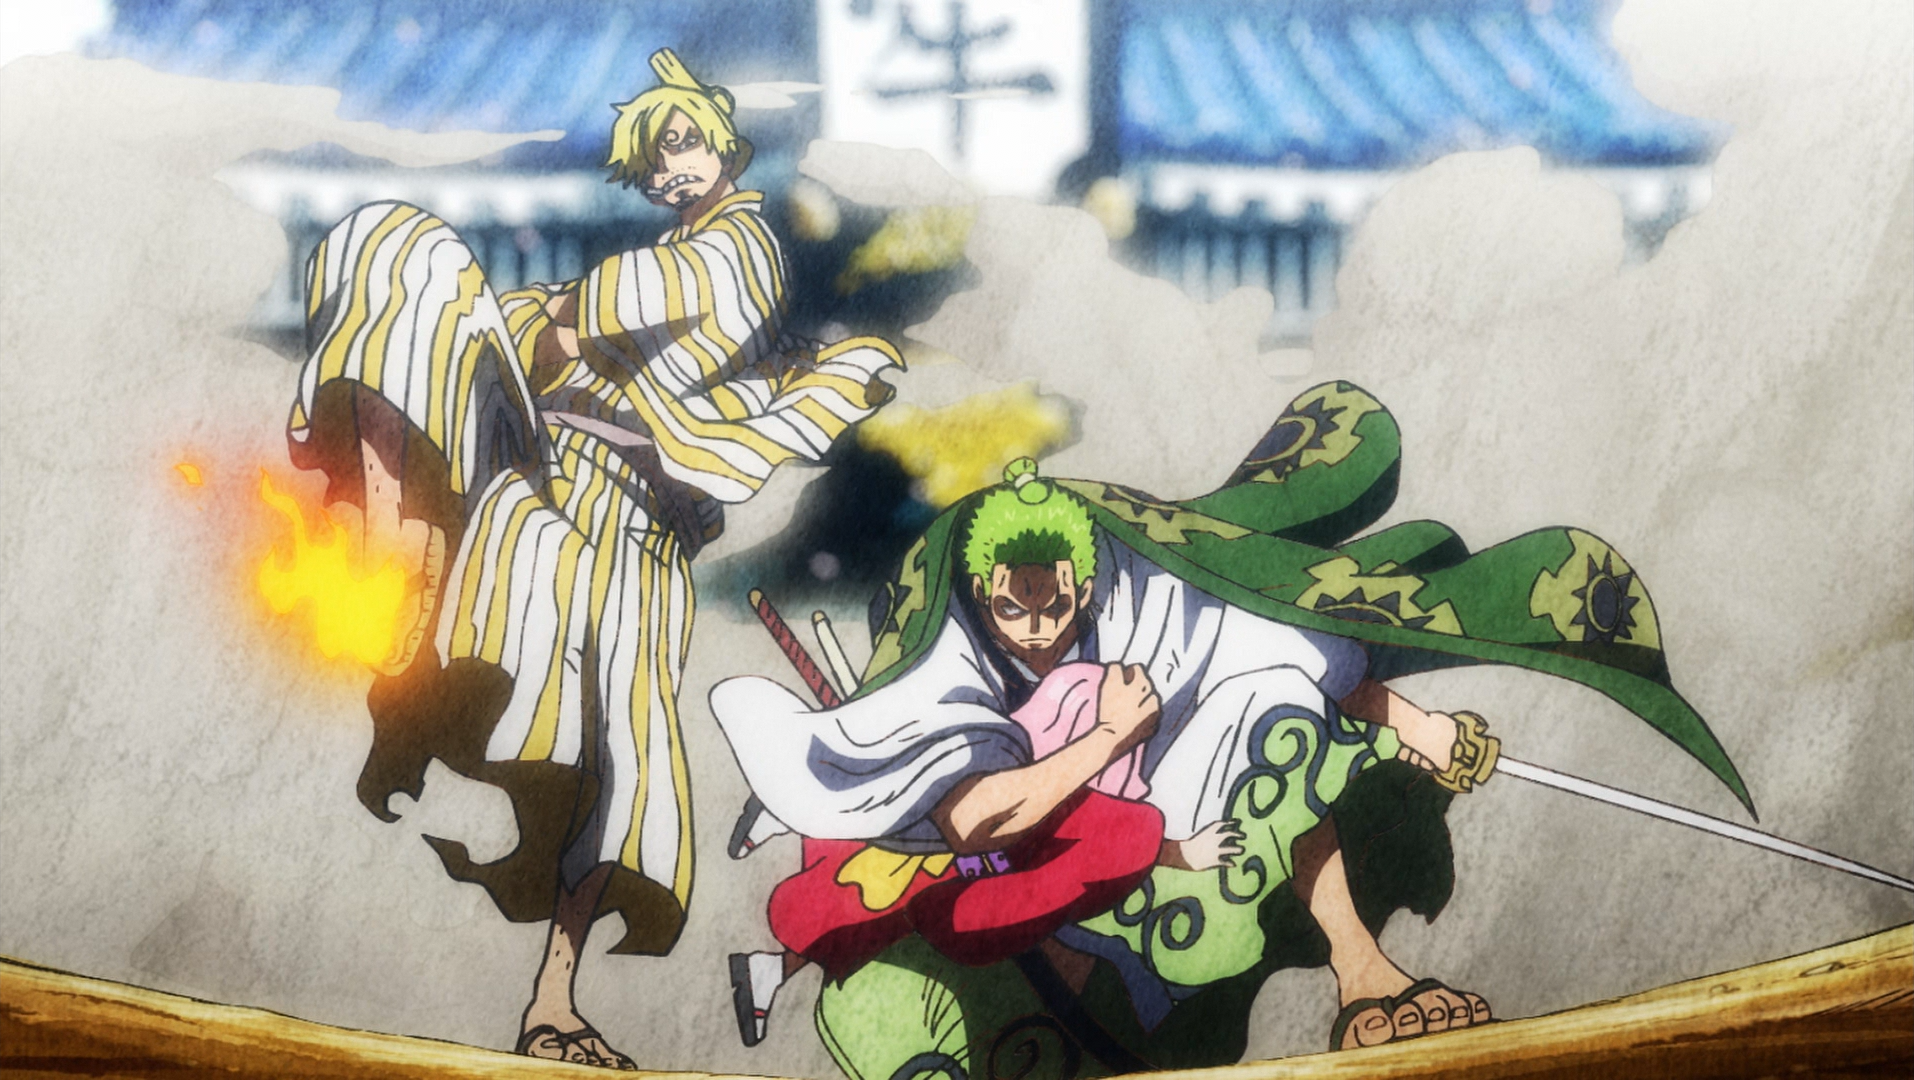 THE SLAP HEARD AROUND THE WORLD - One Piece Episode 1020 reaction 